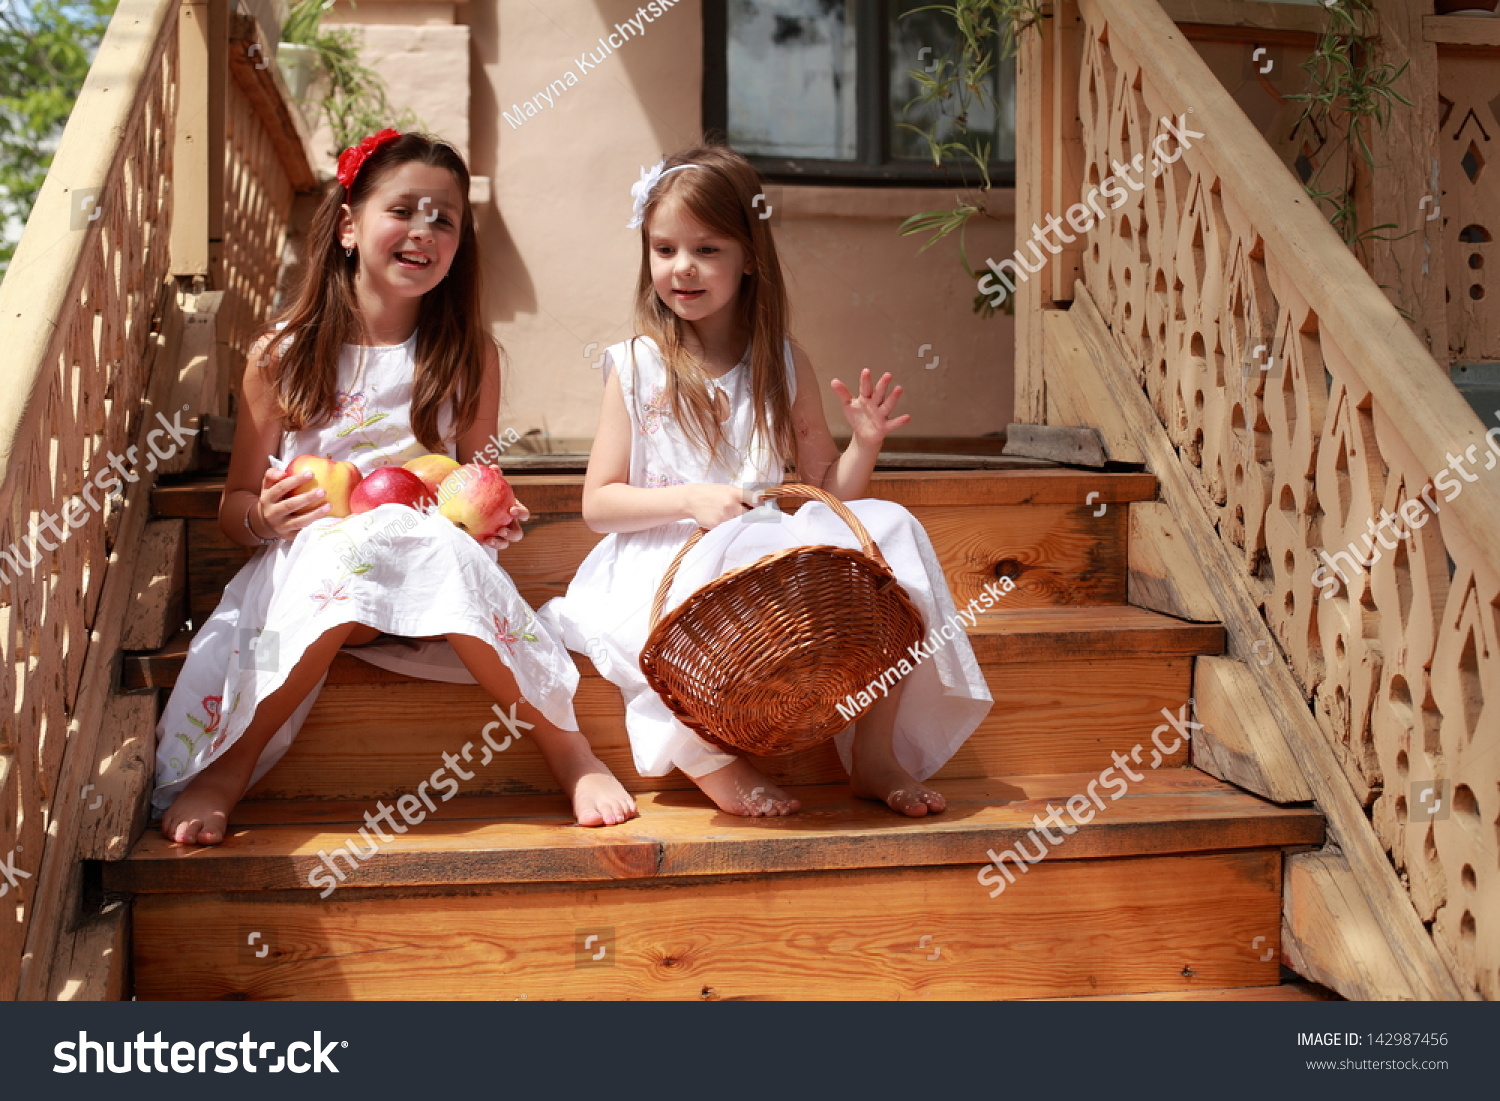 https://image.shutterstock.com/z/stock-photo-two-little-girls-in-white-dresses-and-bare-feet-holding-a-basket-of-apples-142987456.jpg